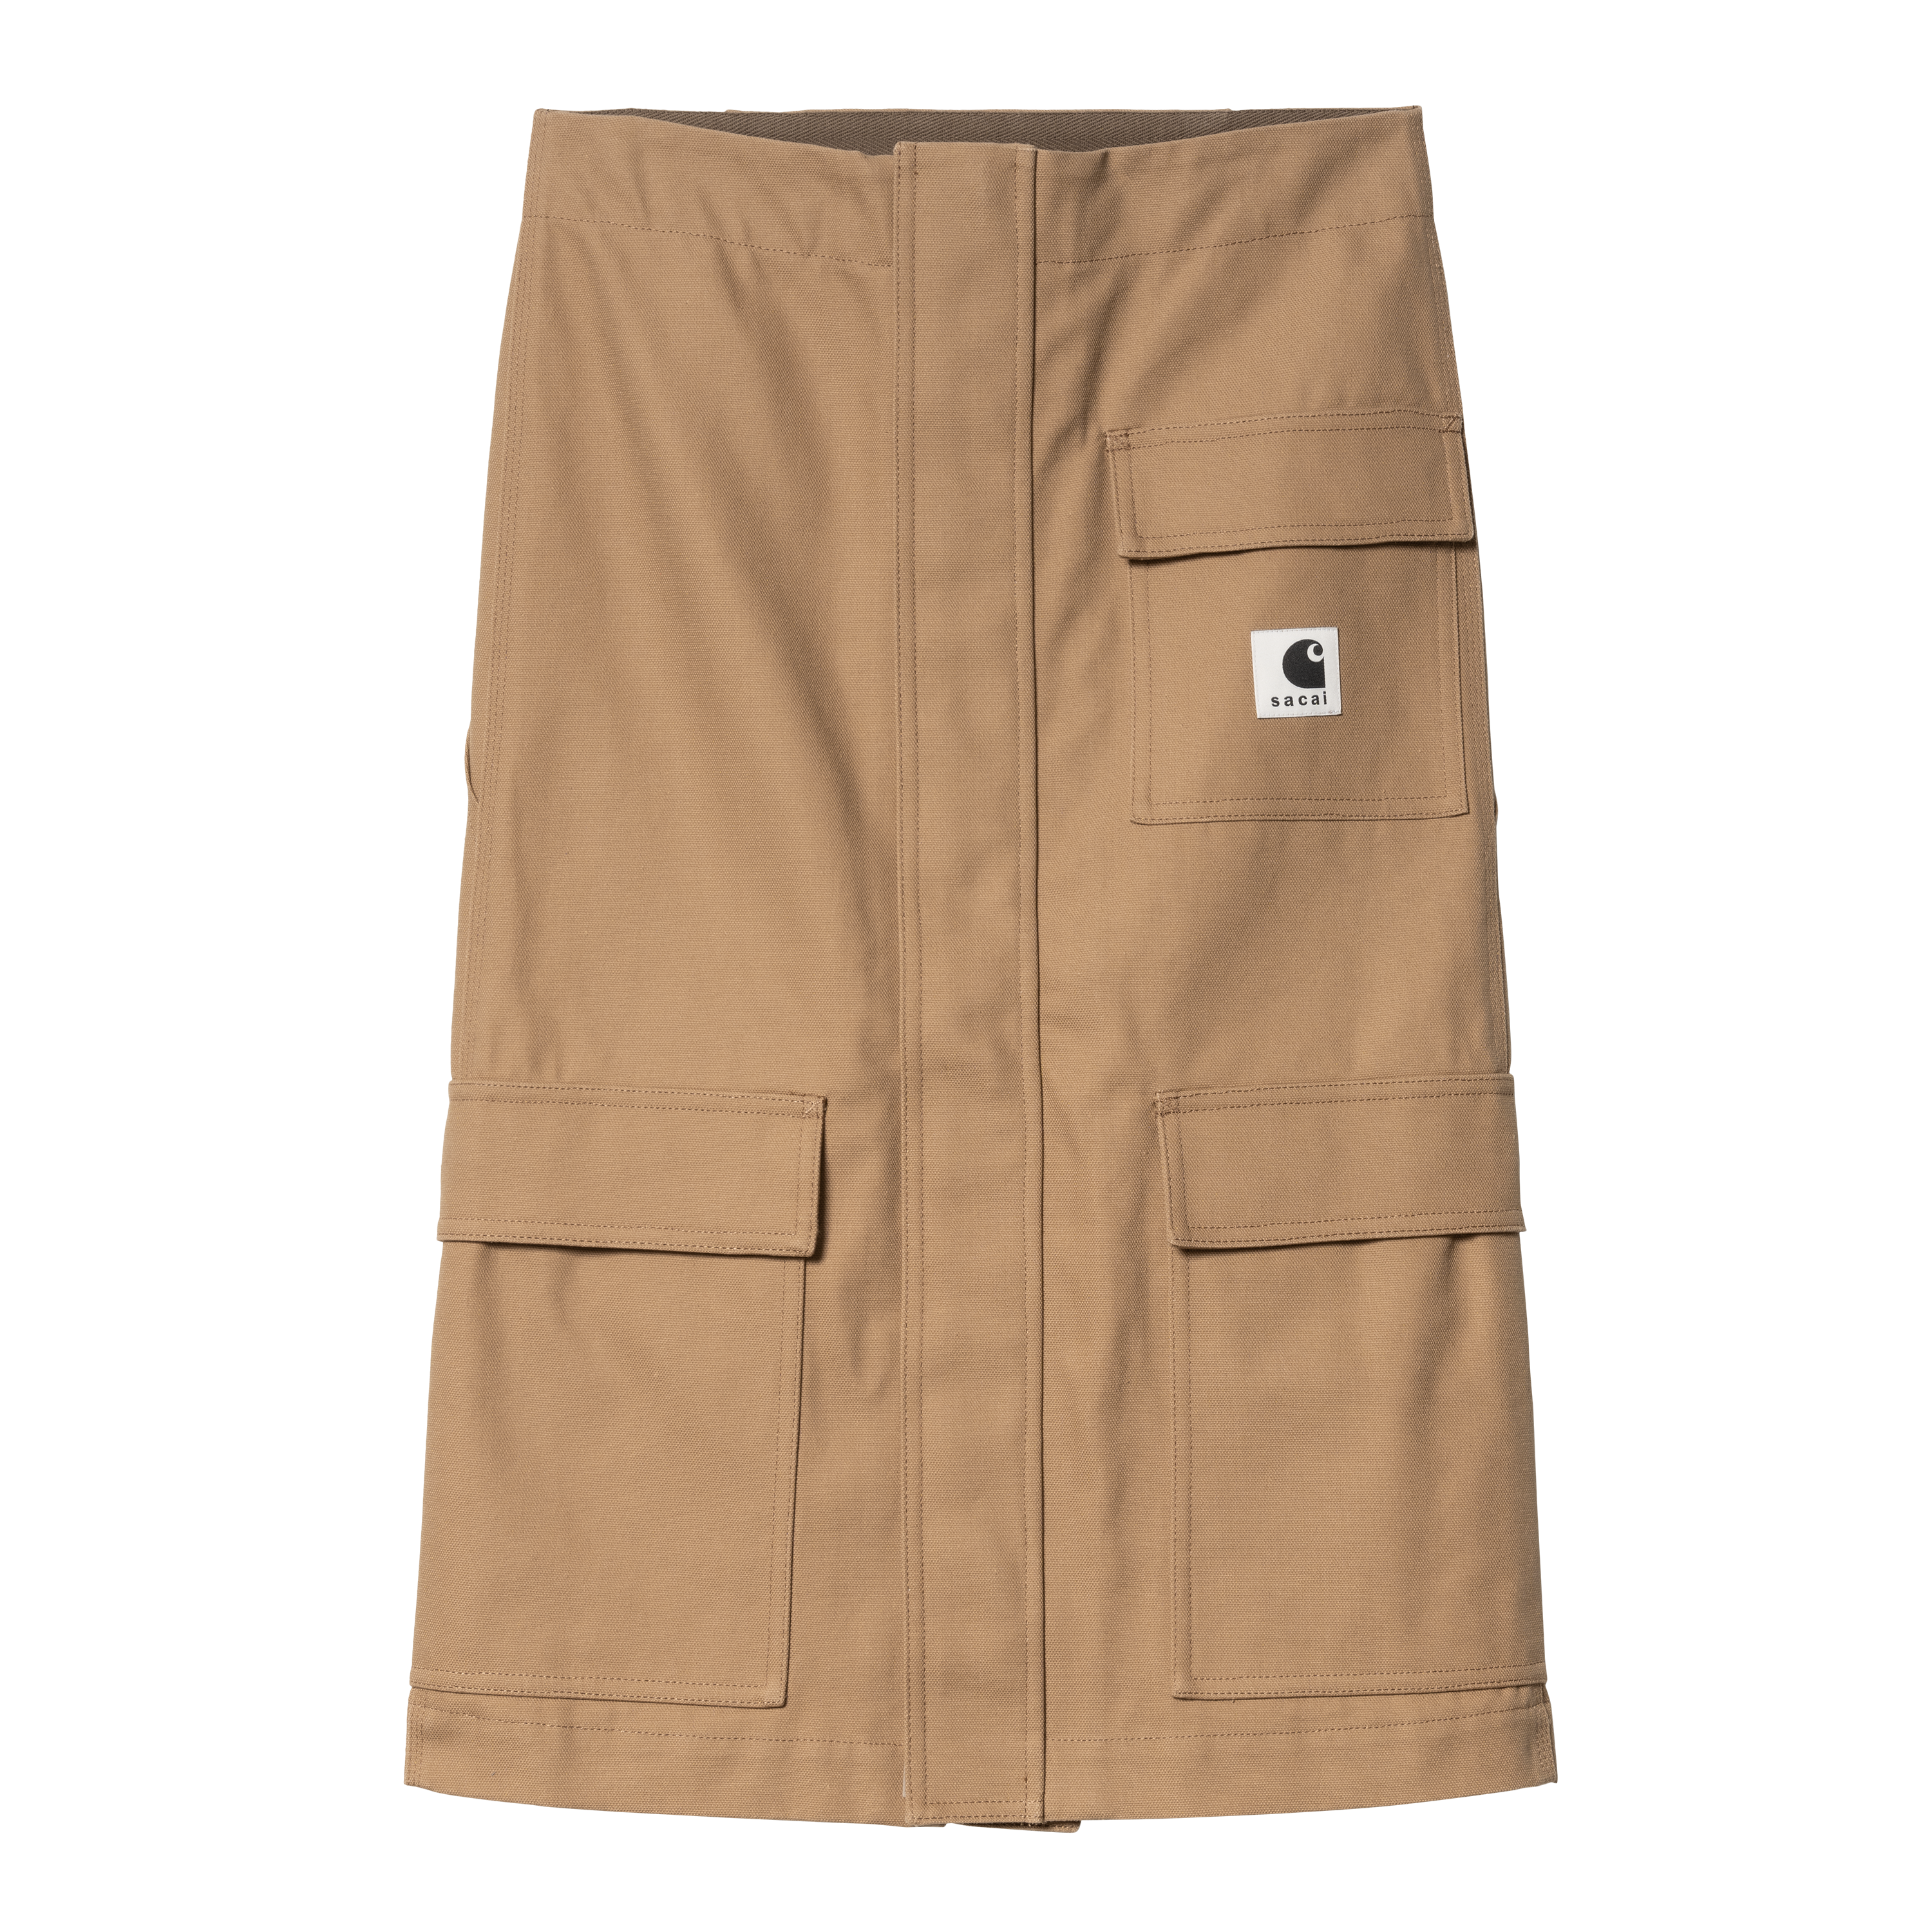 Carhartt WIP sacai x Carhartt WIP Women’s Duck Skirt in Beige